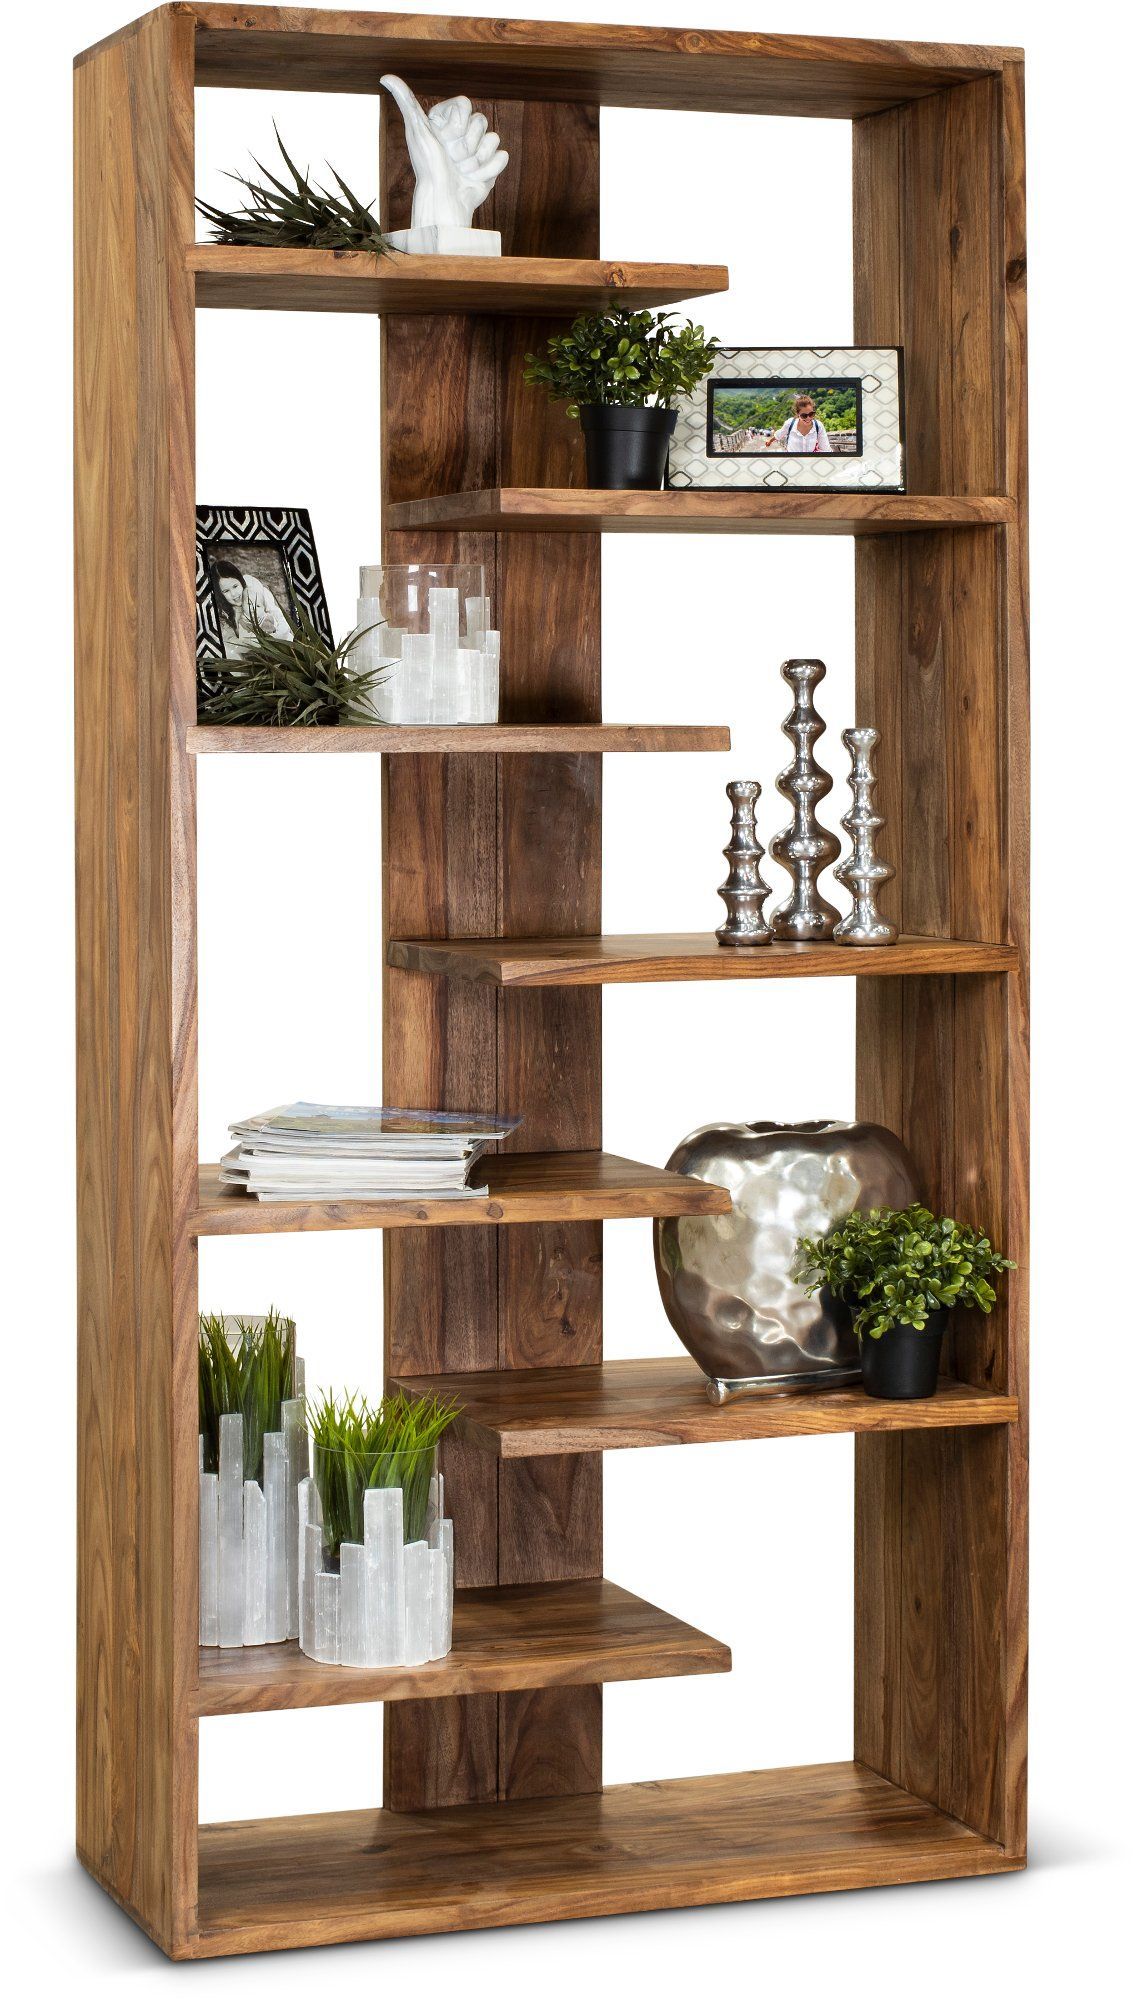 Gorgeous wood bookcase